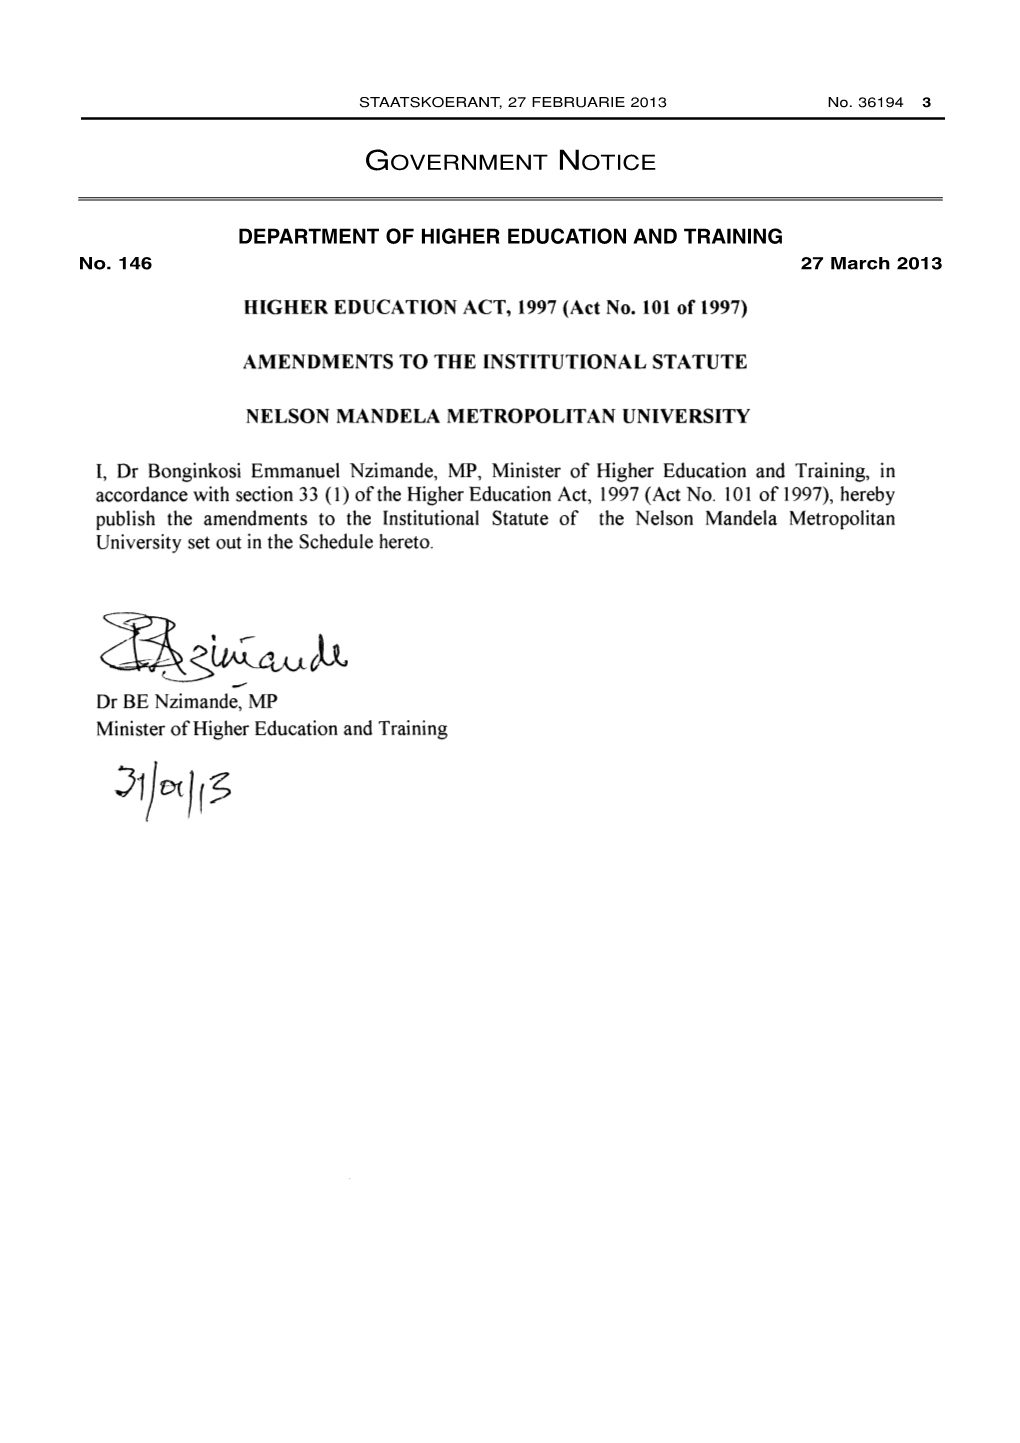 Nelson Mandela Metropolitan University Institutional Statute